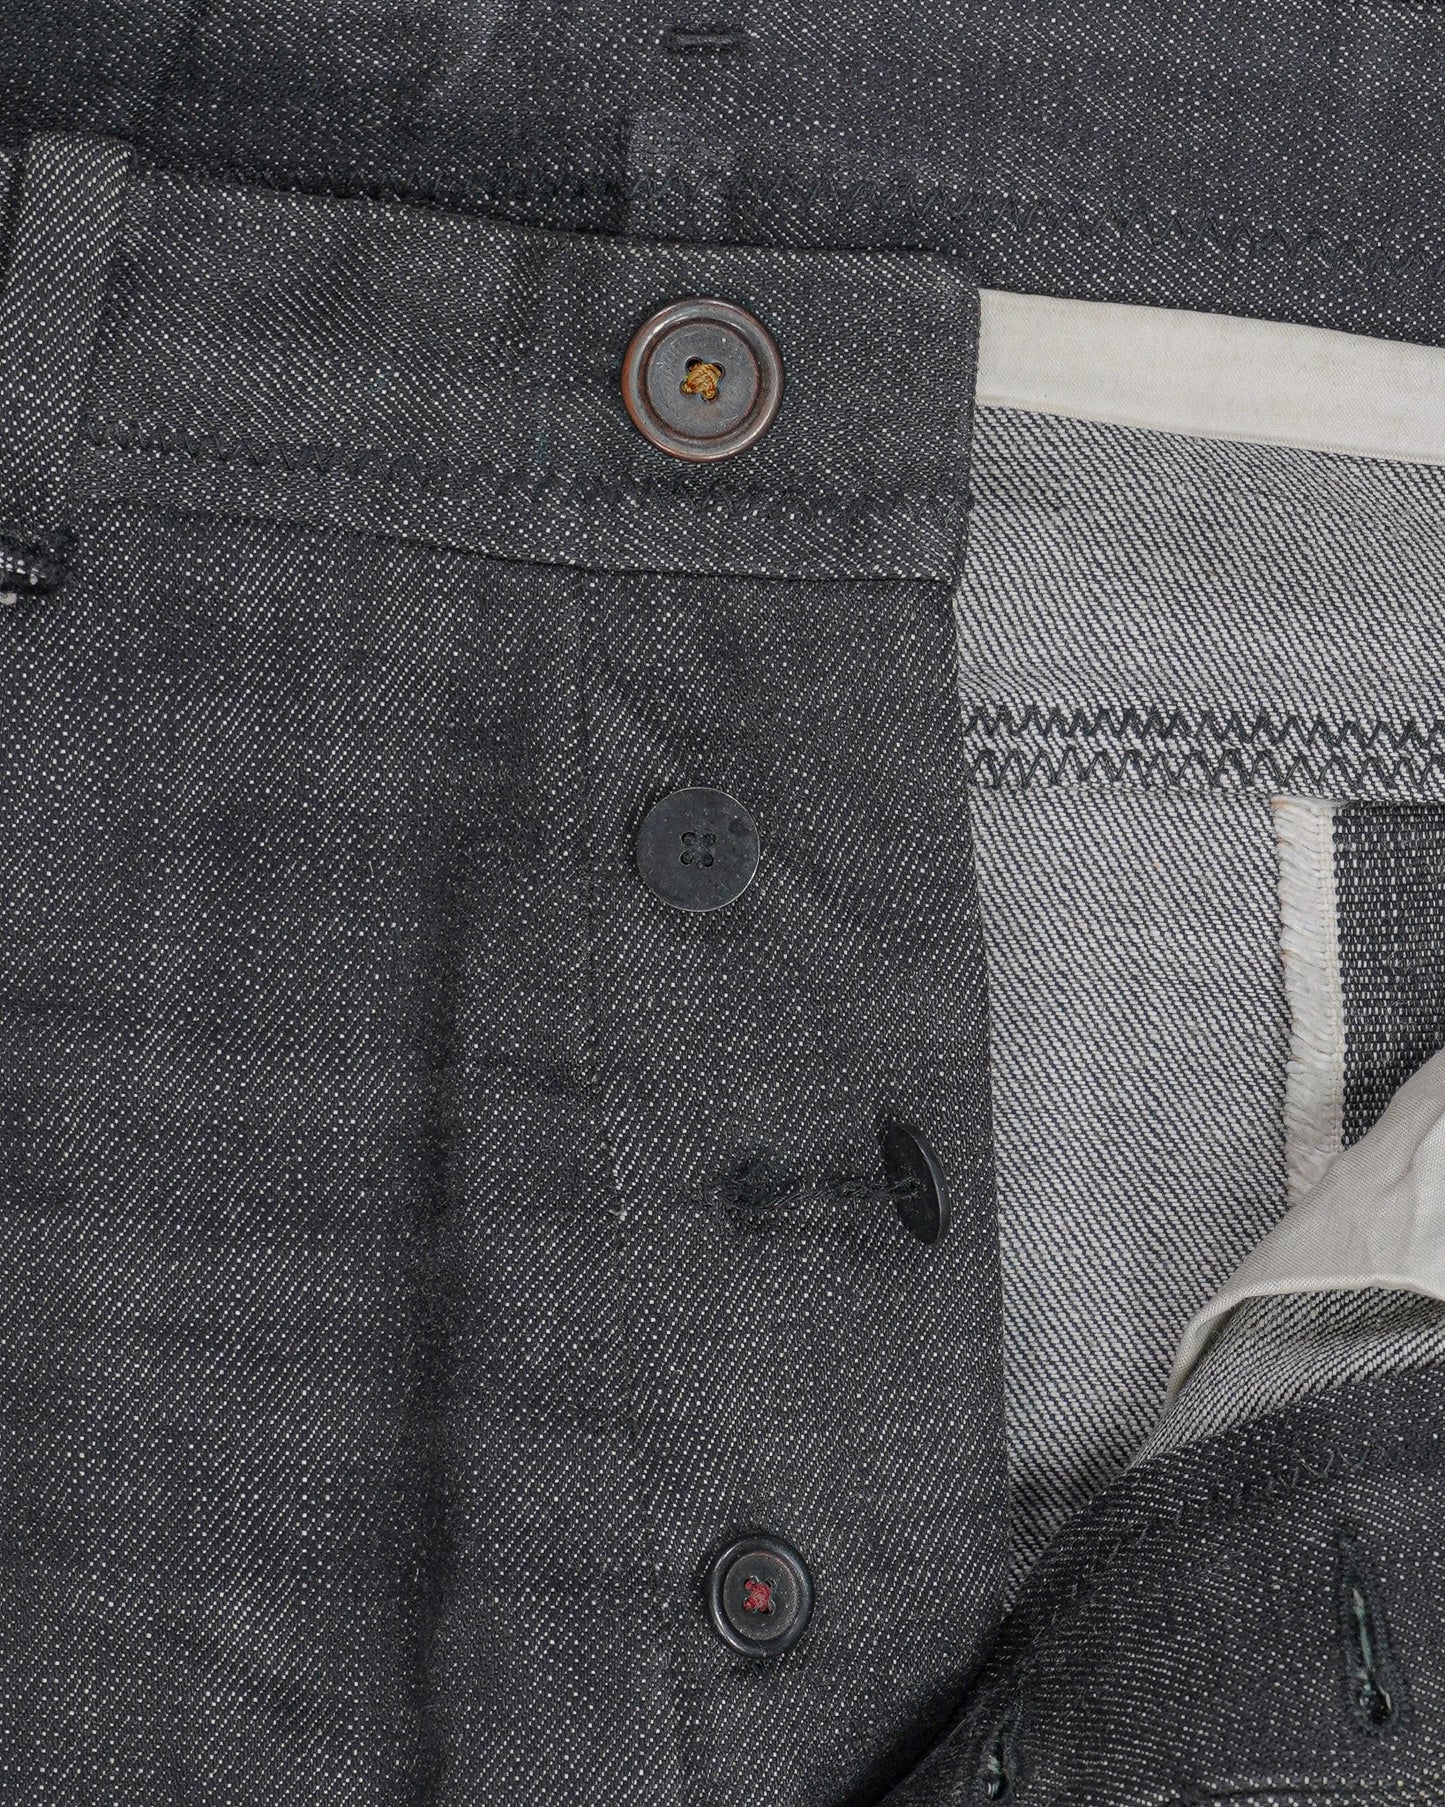 Label Under Construction 1/3rd Seam Overlock Jeans